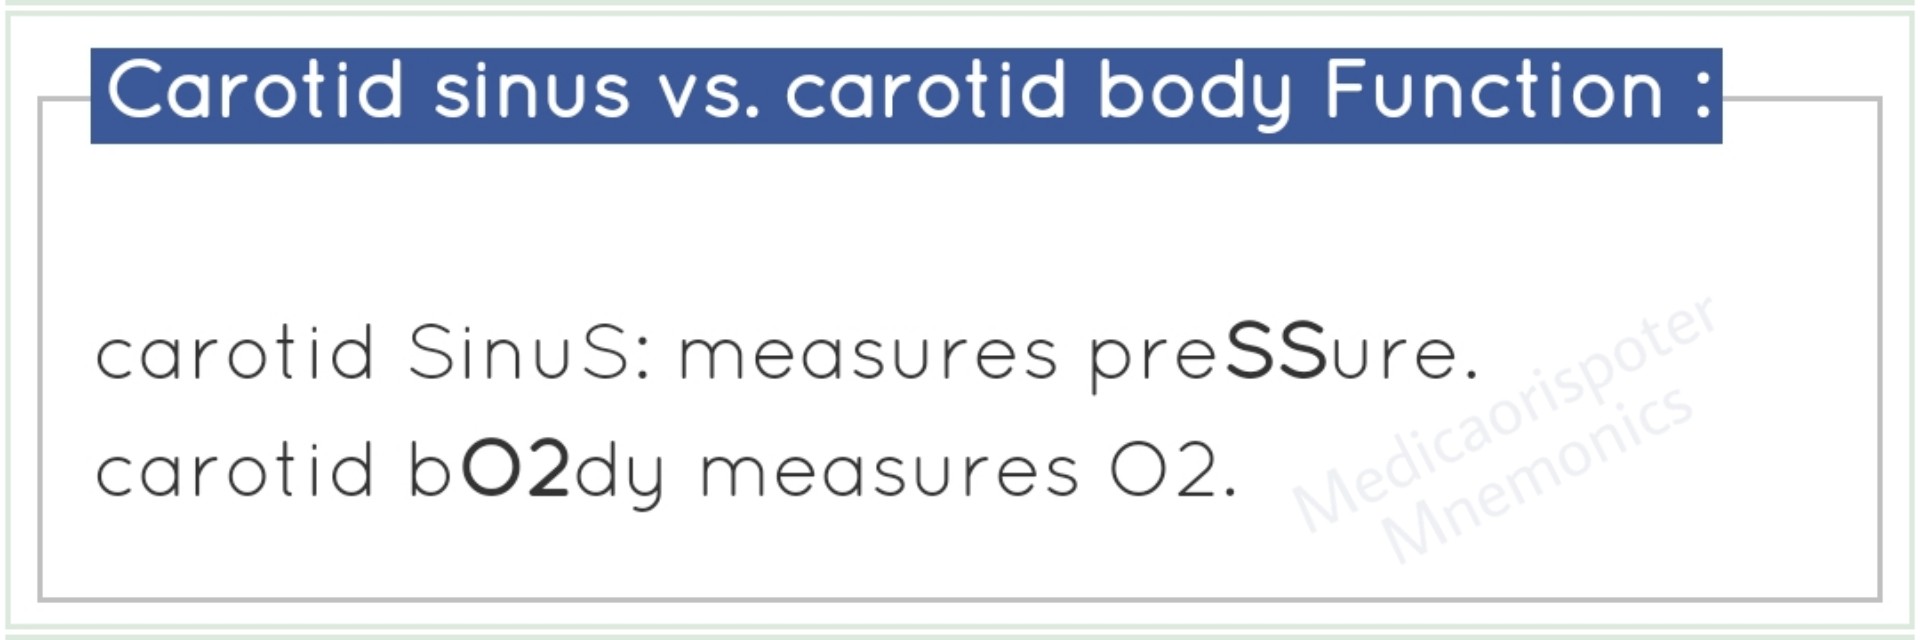 Carotid Sinus Vs Carotid Body Functions